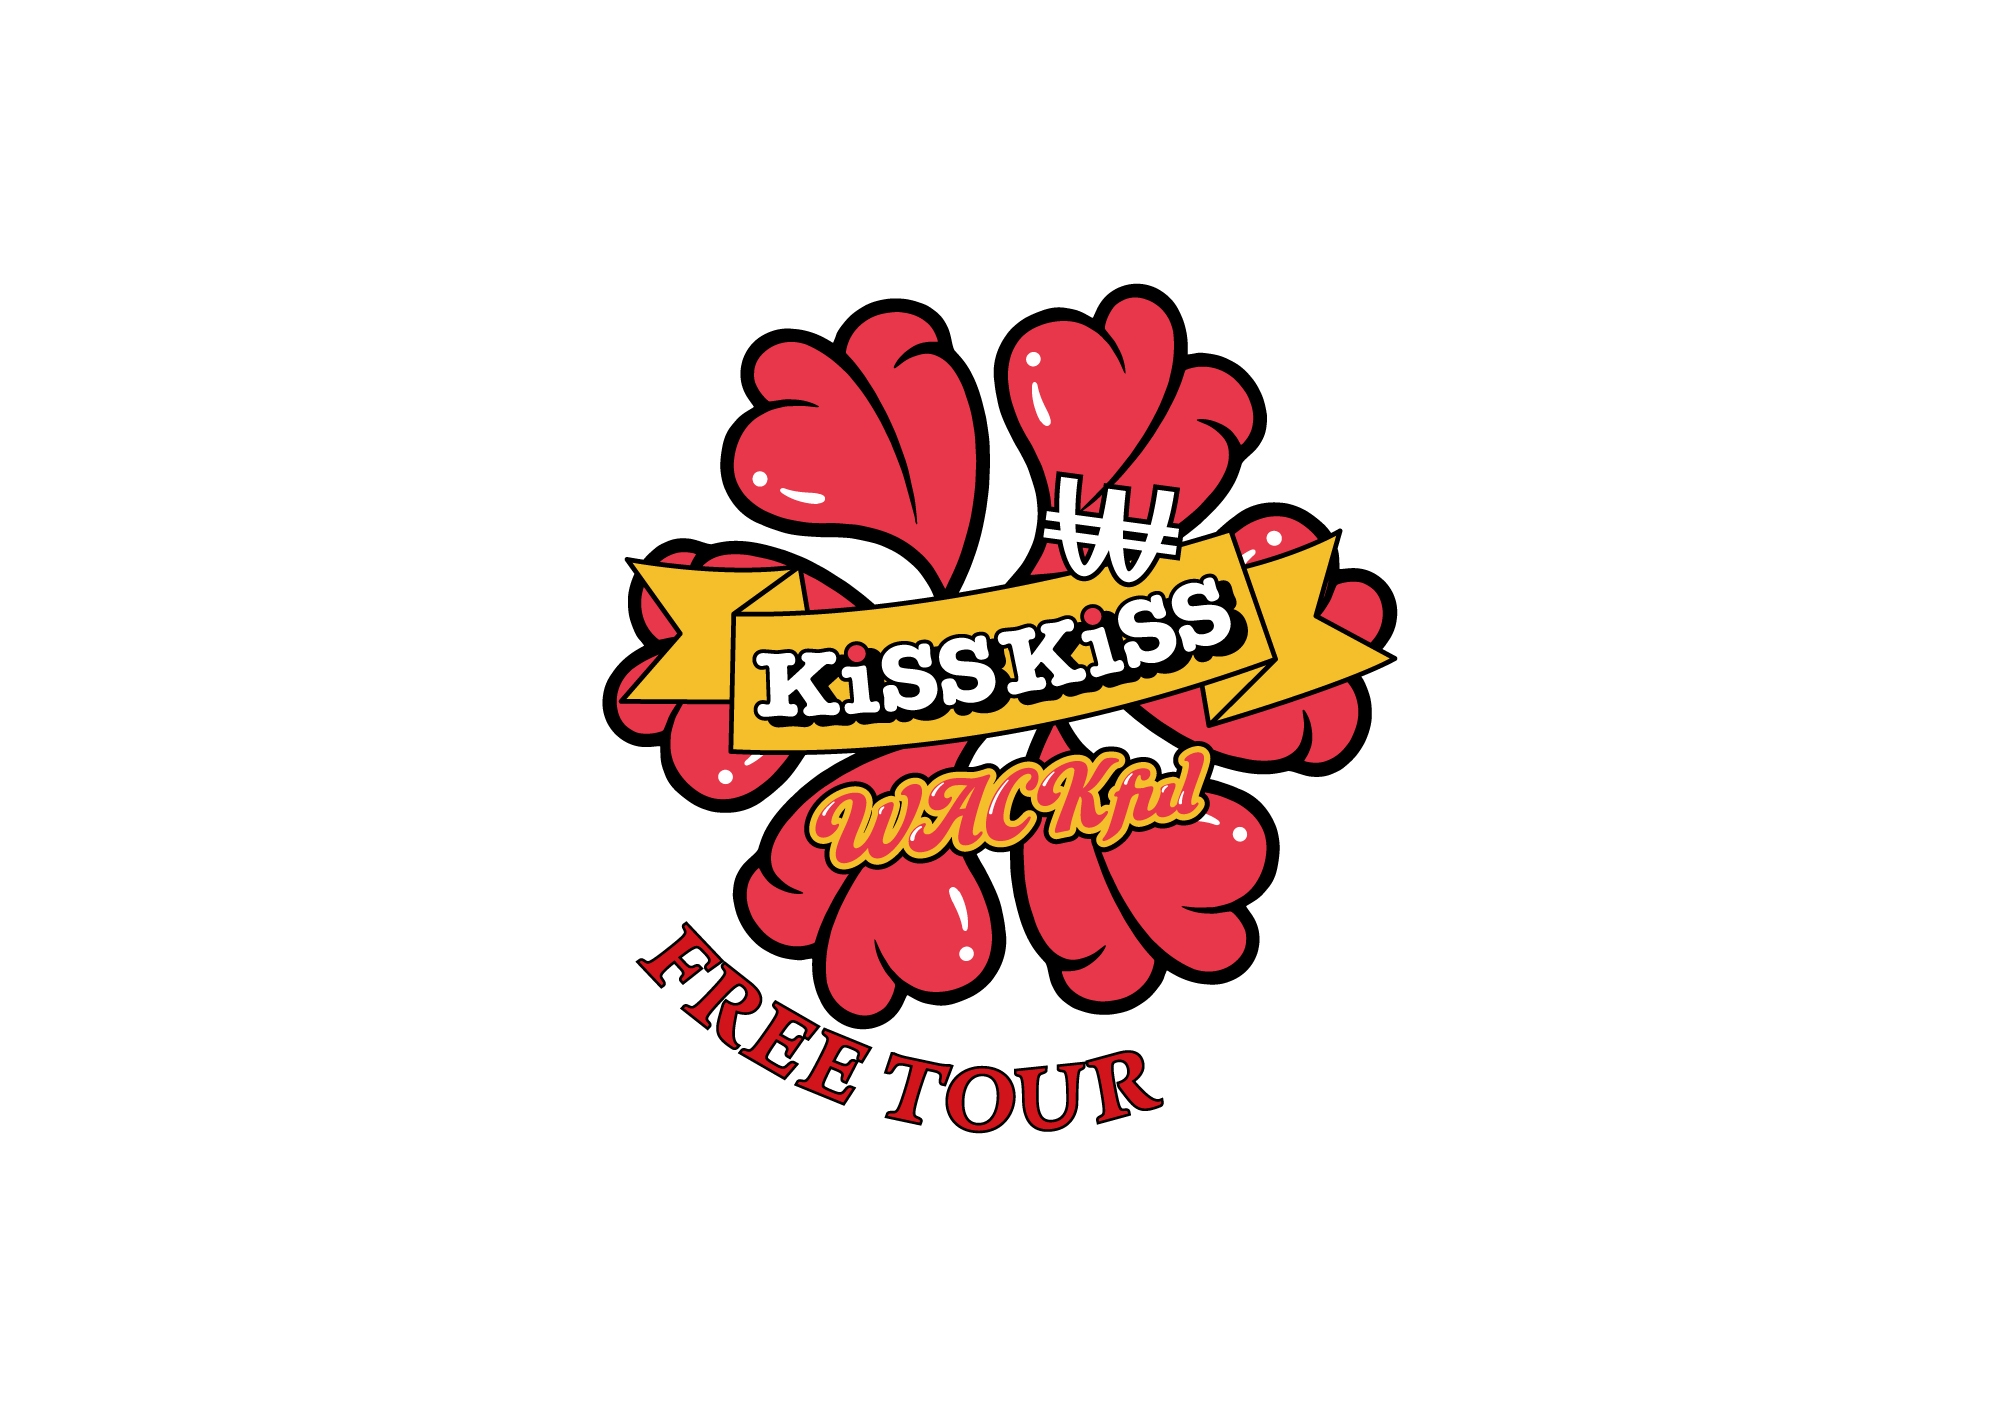 KiSS KiSS フリーライブツアー 「KiSS KiSS WACKful FREE TOUR」開催